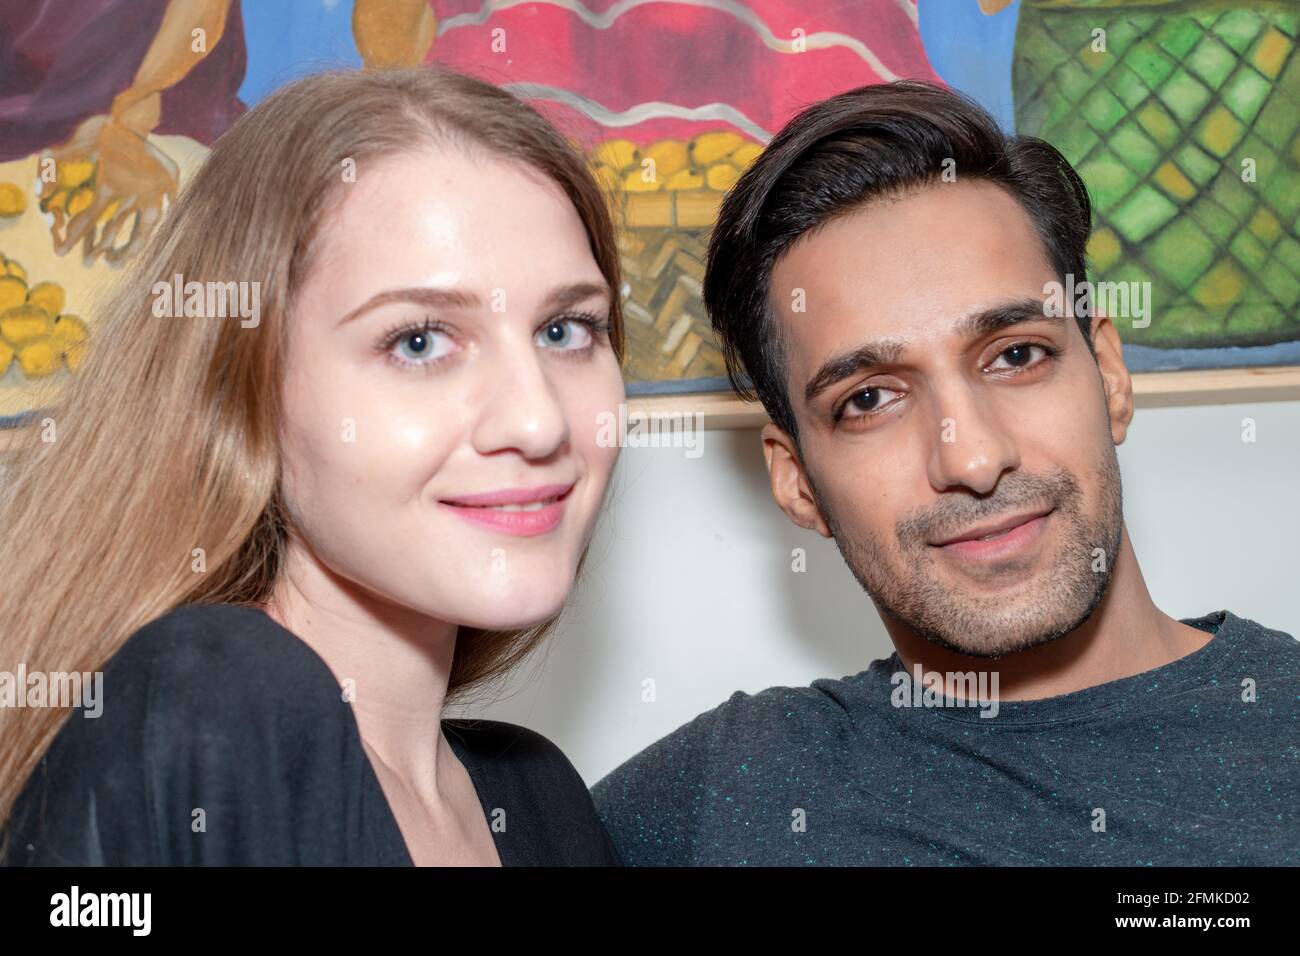 https://c8.alamy.com/comp/2FMKD02/closeup-of-a-young-international-couple-a-russian-girl-and-indian-guy-2FMKD02.jpg